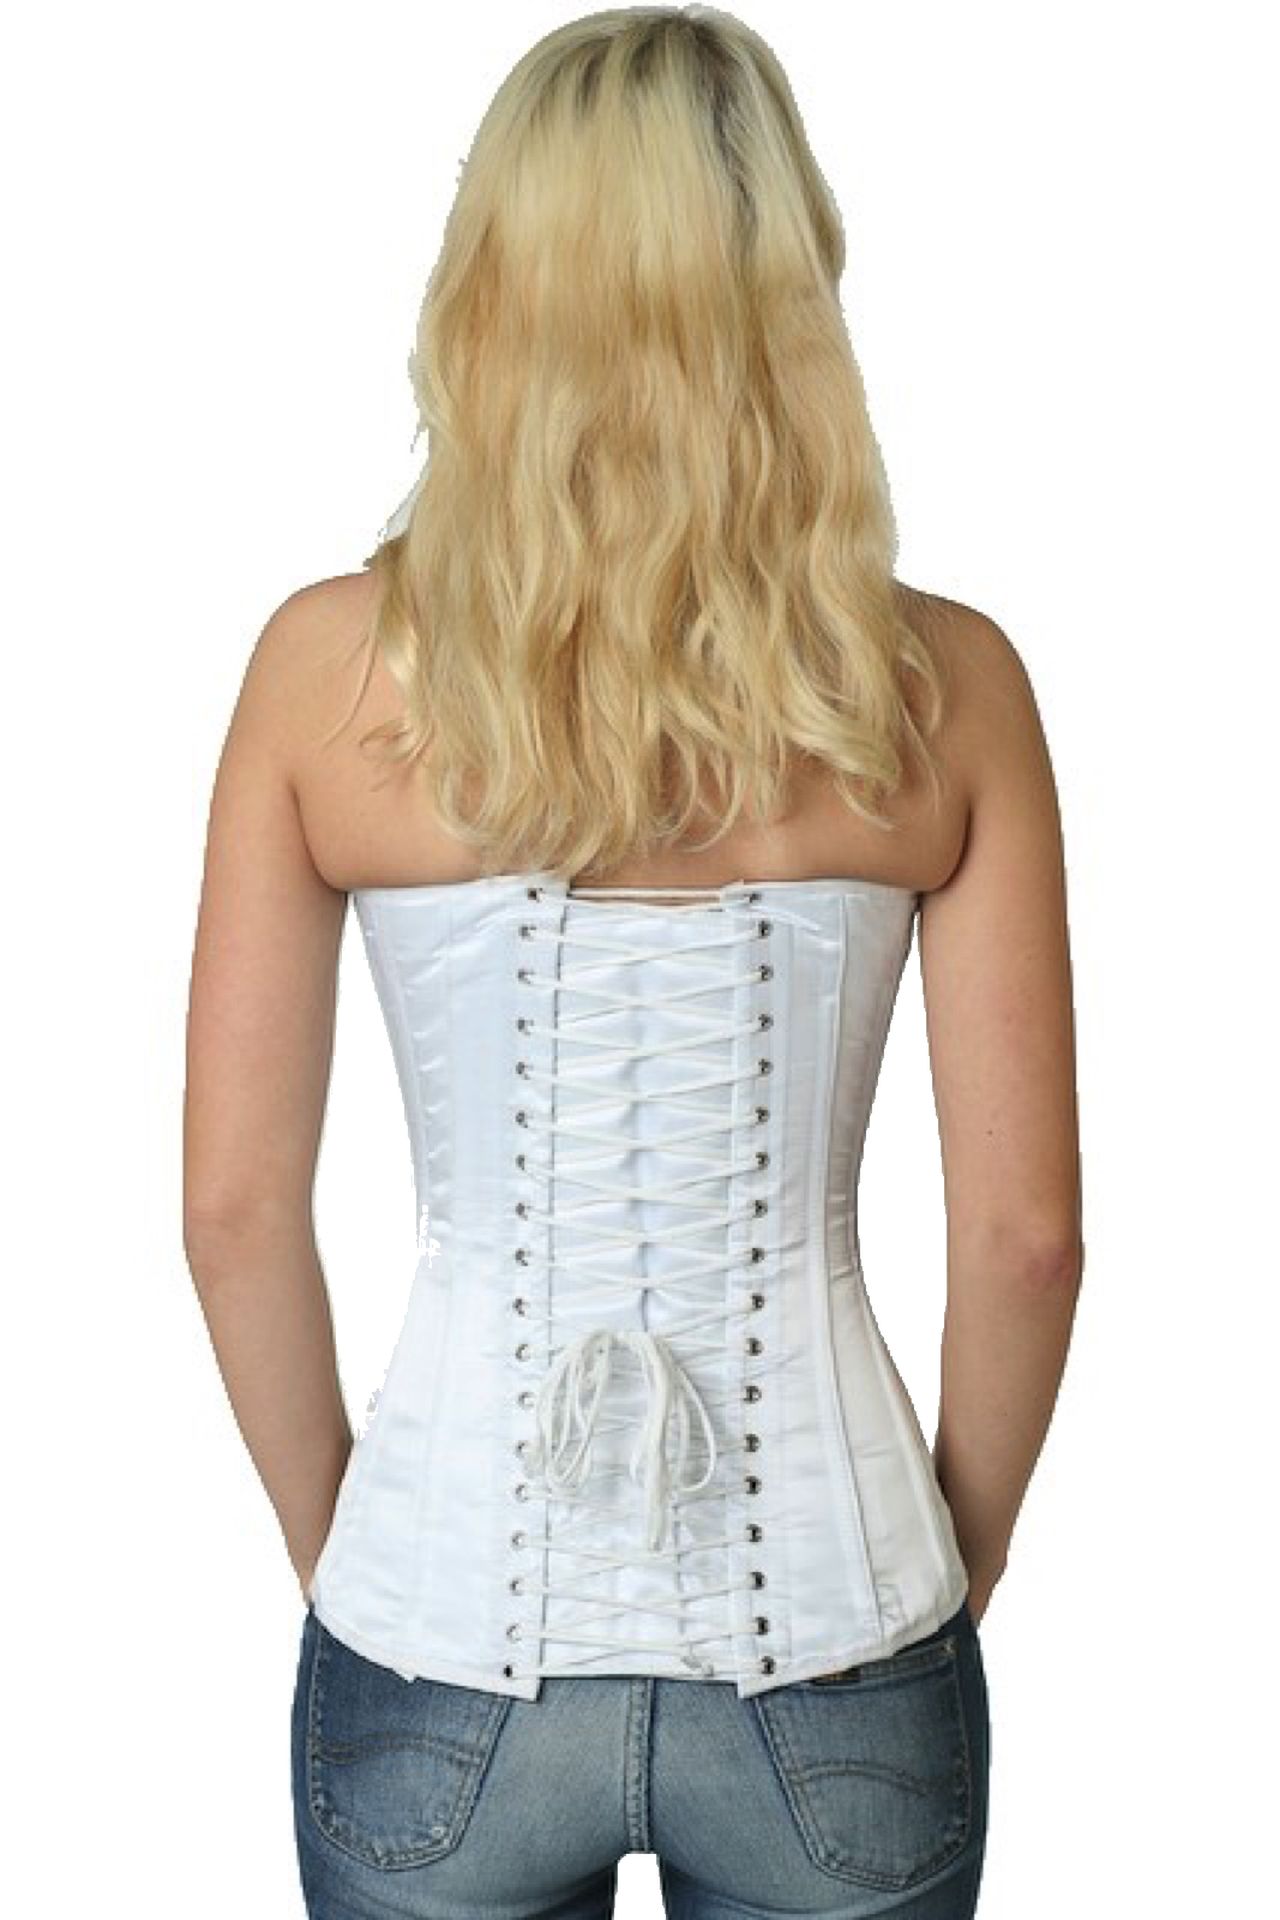 Satijn corset wit volborst Korset sy02